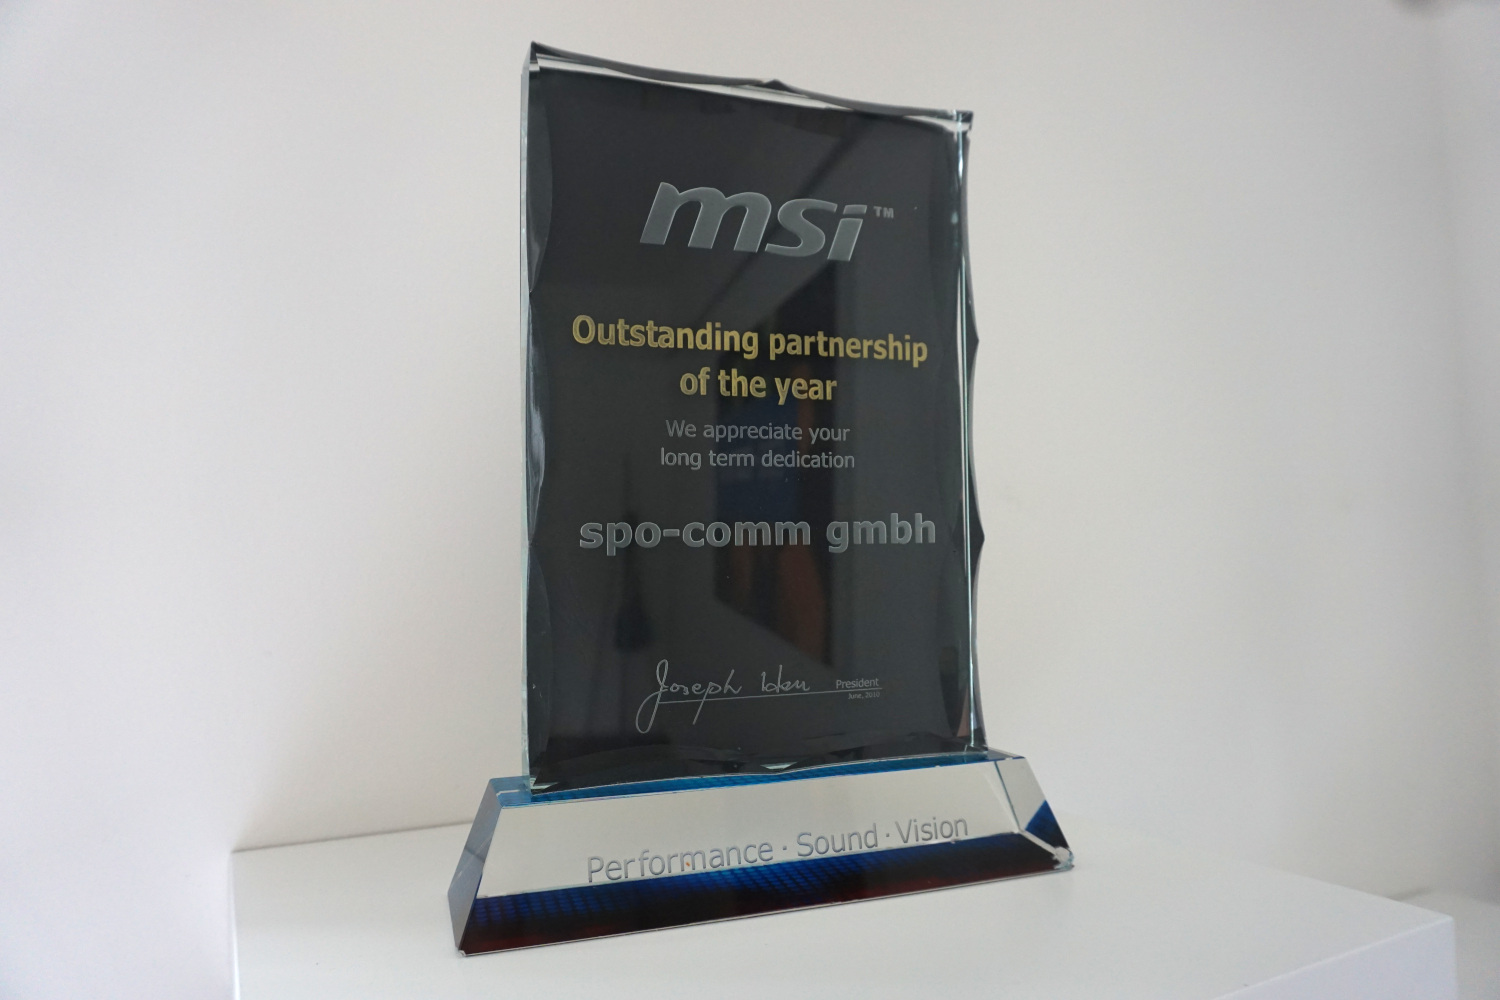 spo-comm receives MSI IPC Award